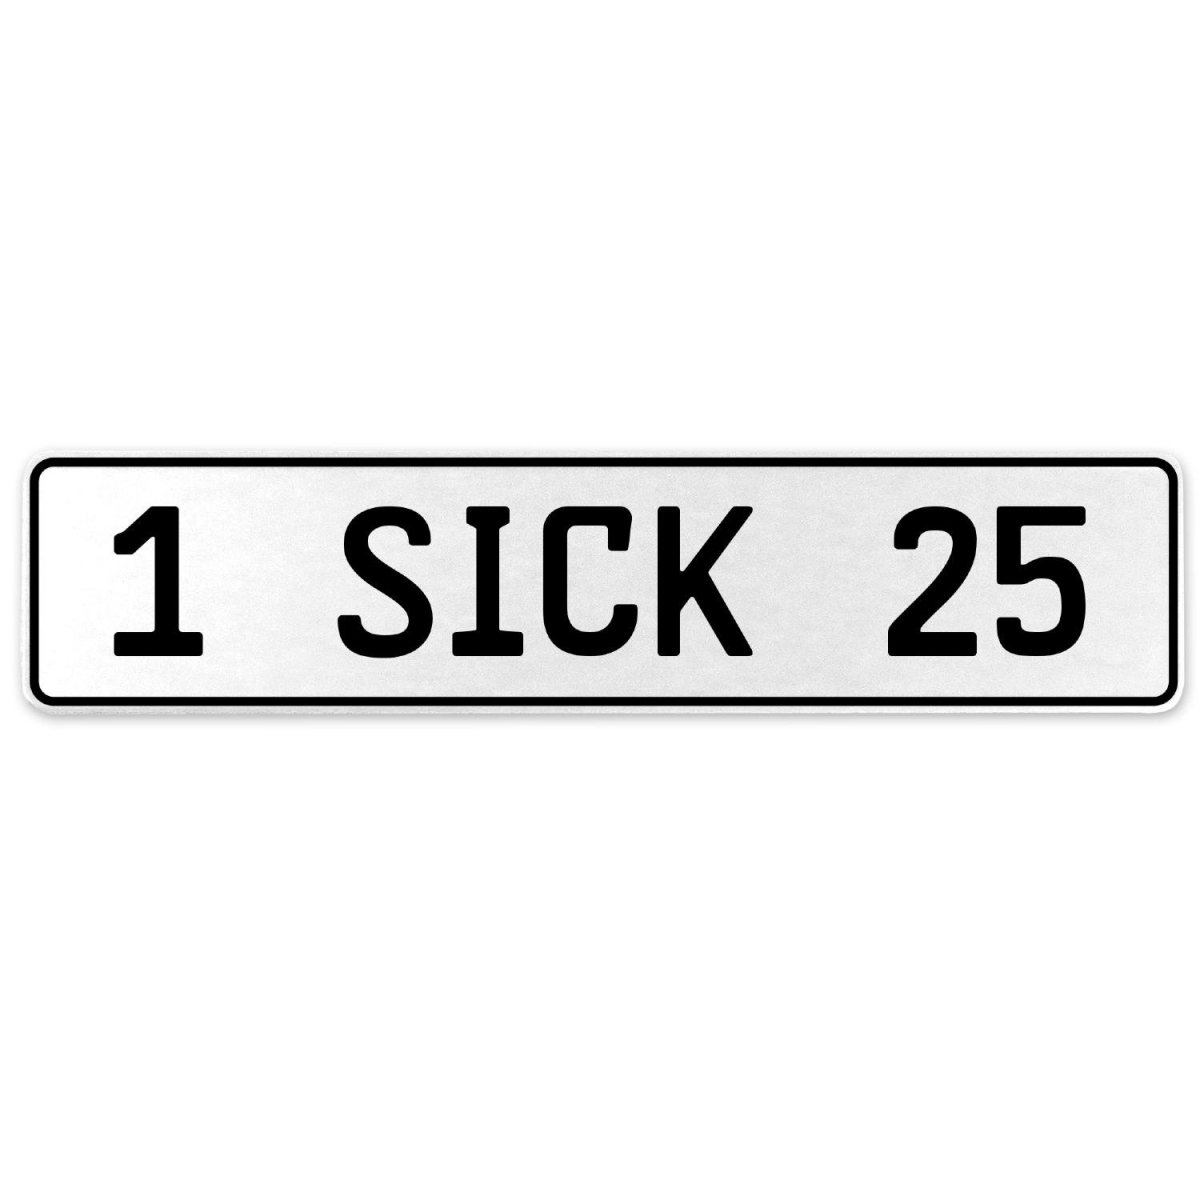 554424 1 Sick 25 - White Aluminum Street Sign Mancave Euro Plate Name Door Sign Wall